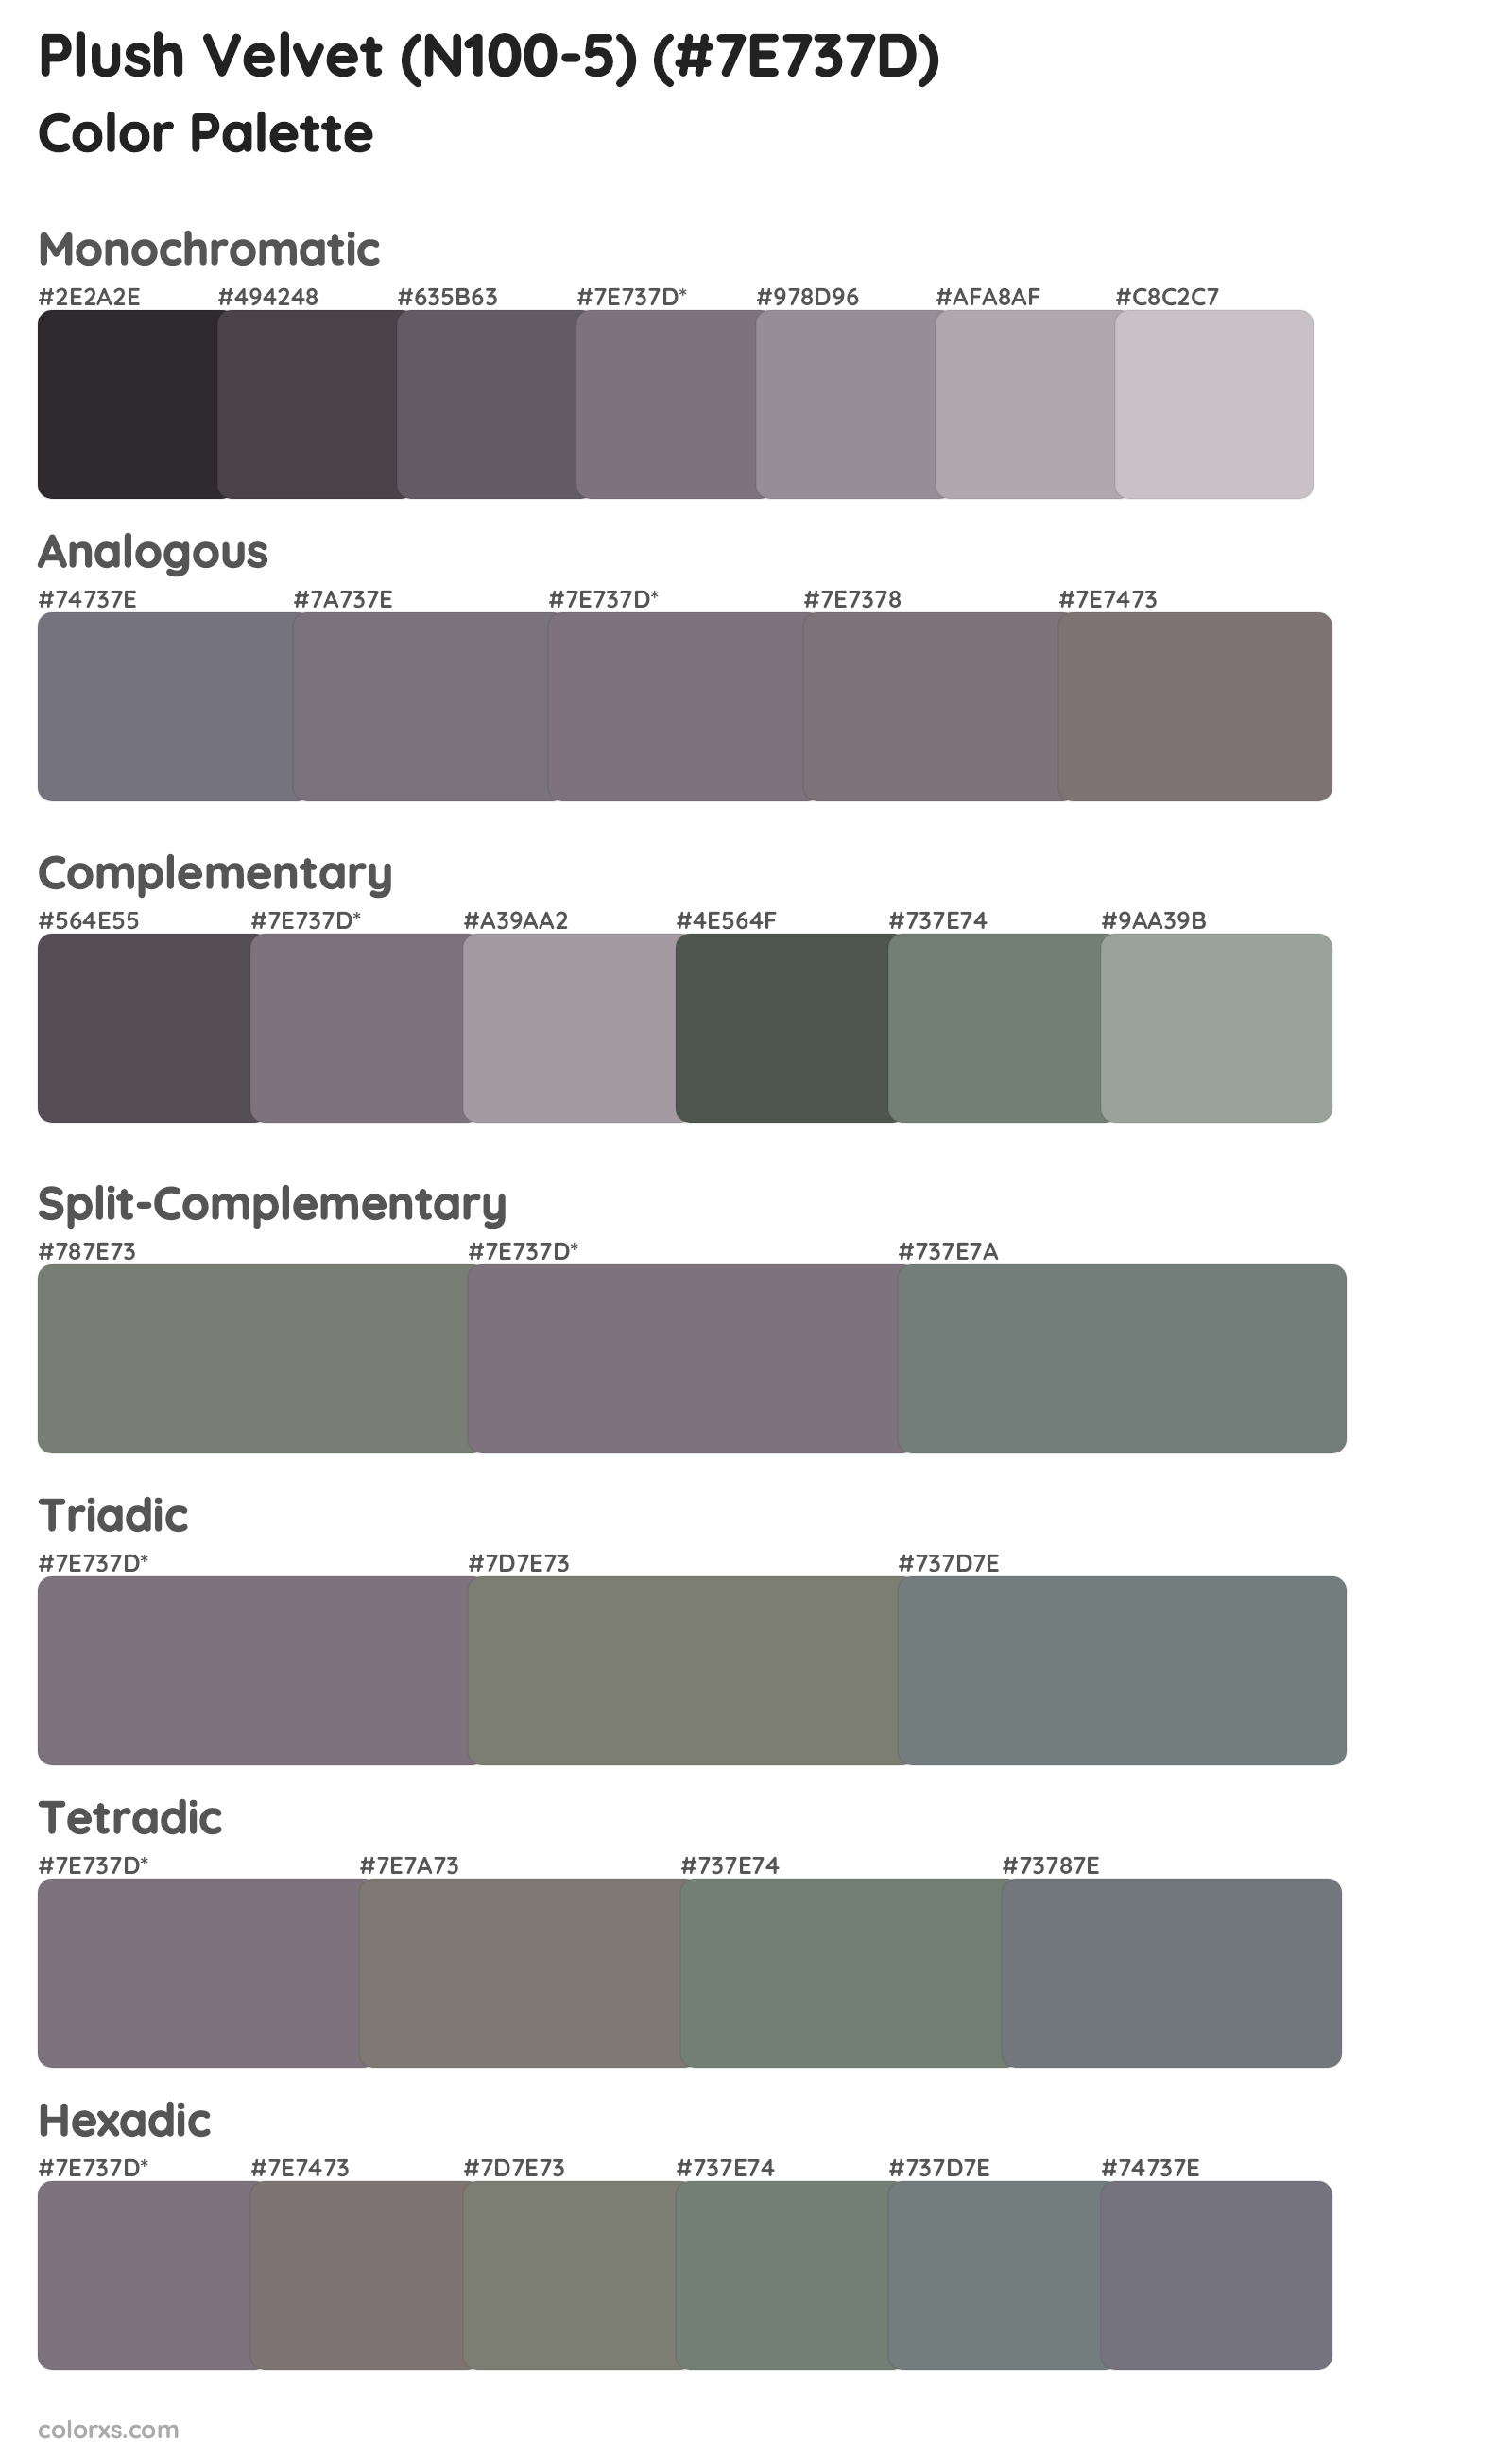 Plush Velvet (N100-5) Color Scheme Palettes